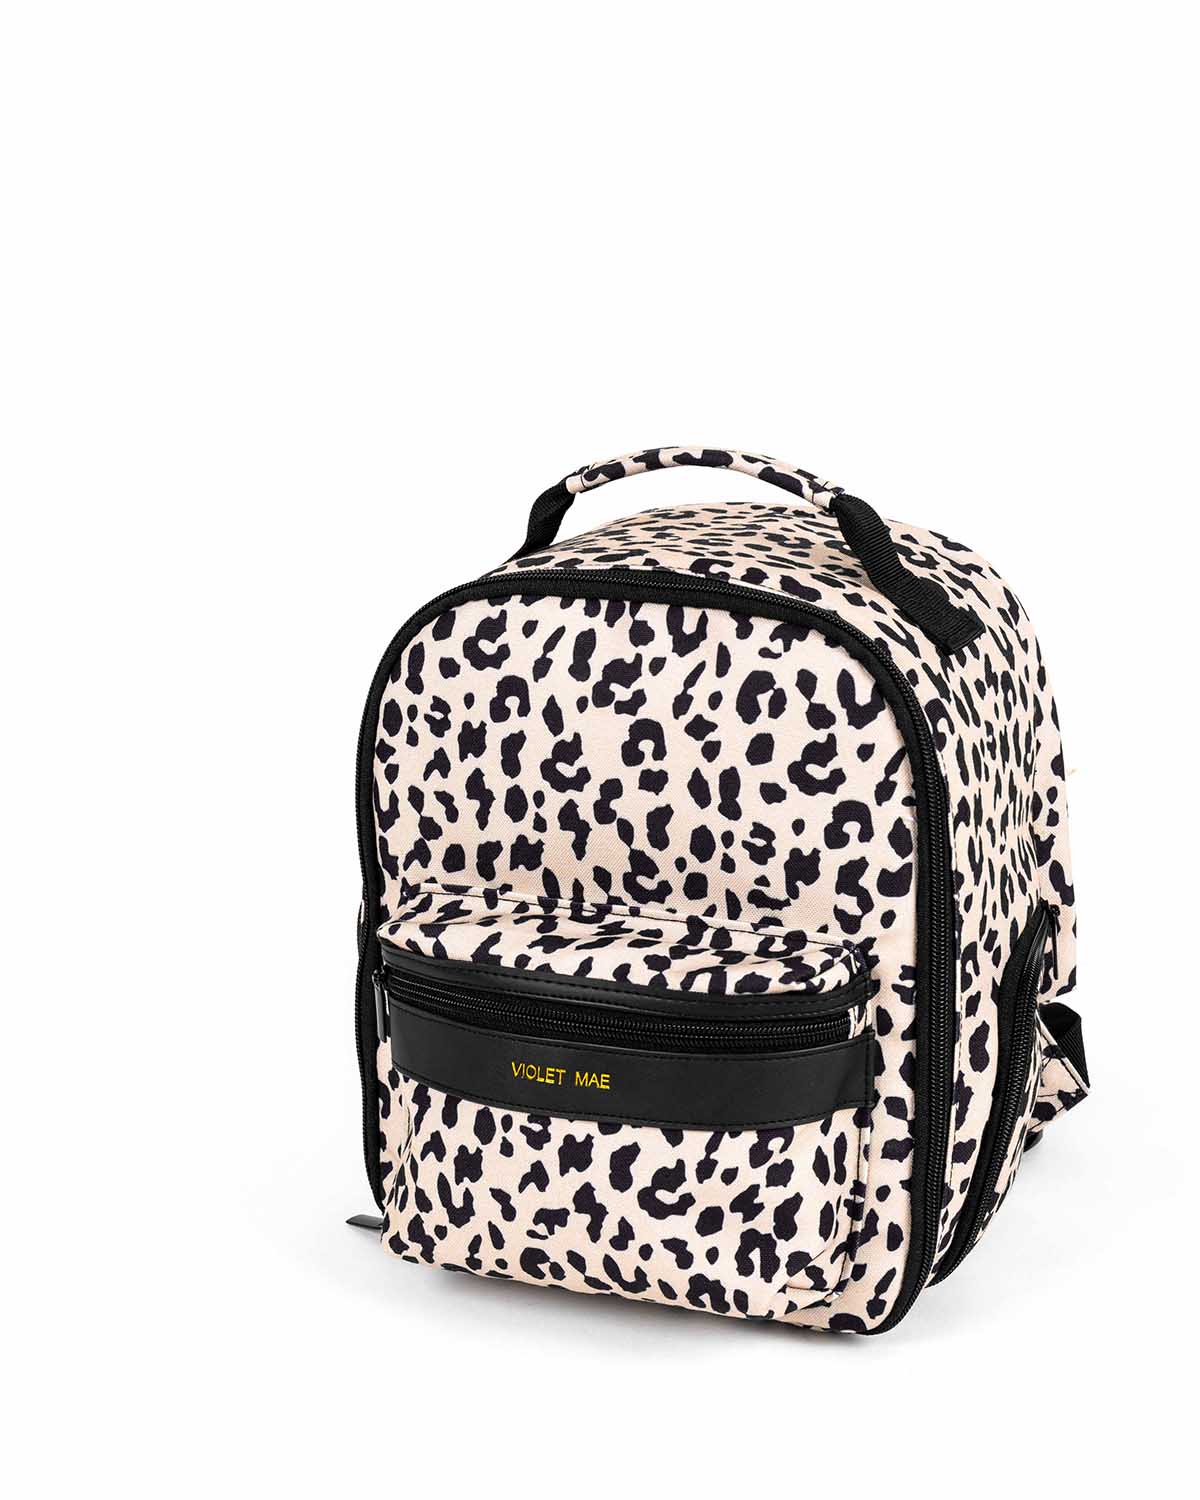 camera bag for ladies, stylish womens camera backpack, stylish camera bag, leopard print camera bag